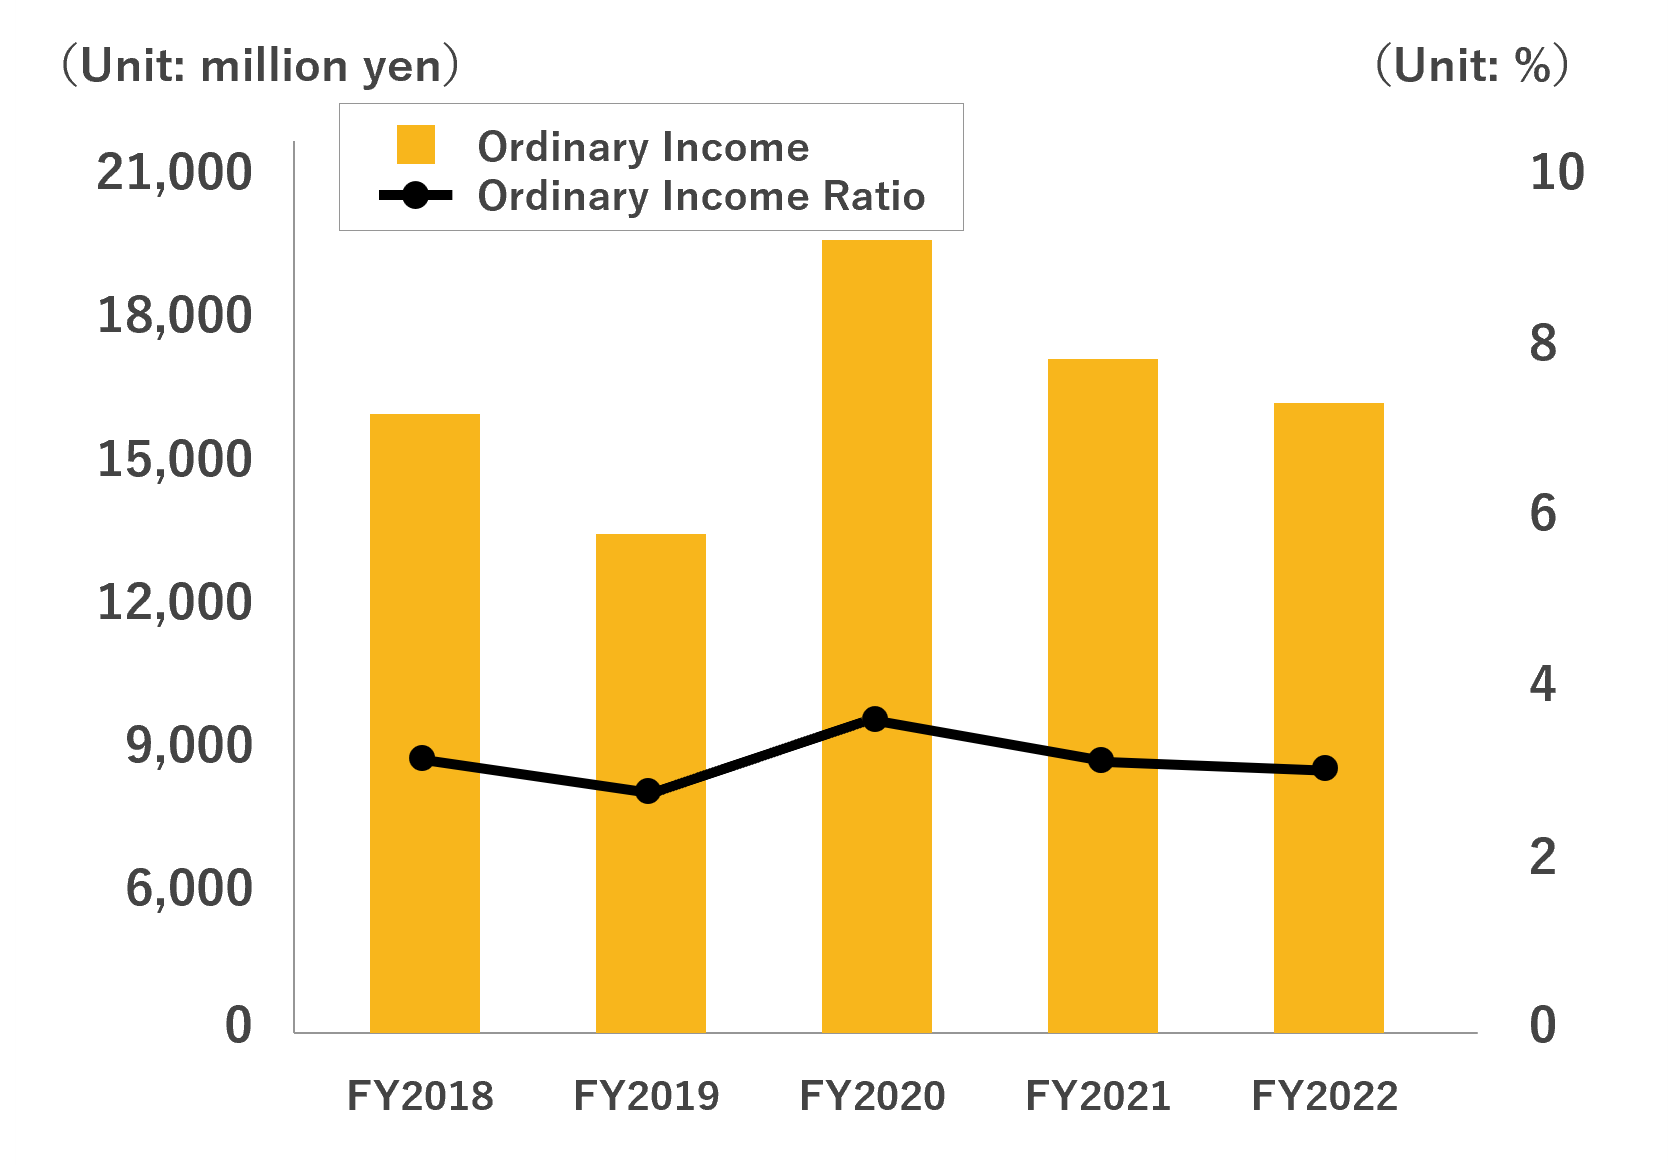 Ordinary Income and Ordinary Income Ratio​